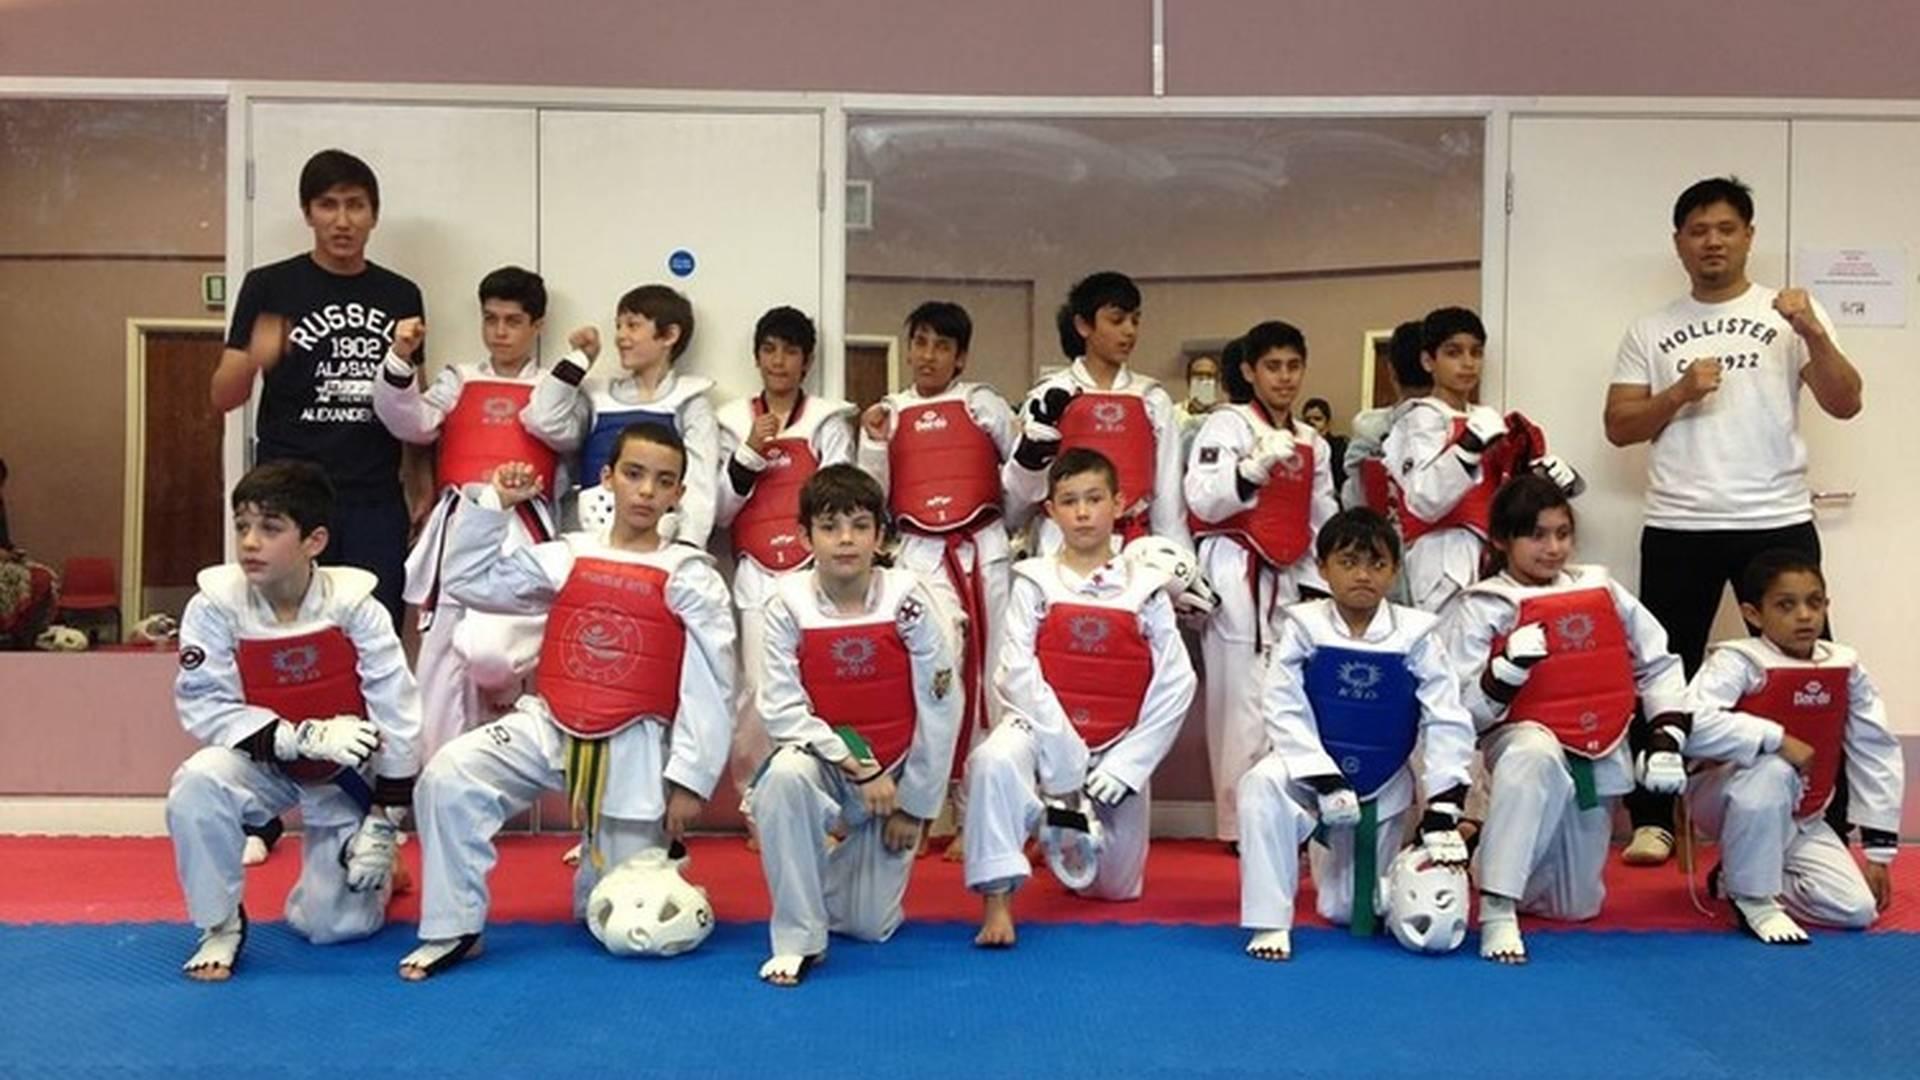 Ilyeo Taekwondo Club photo